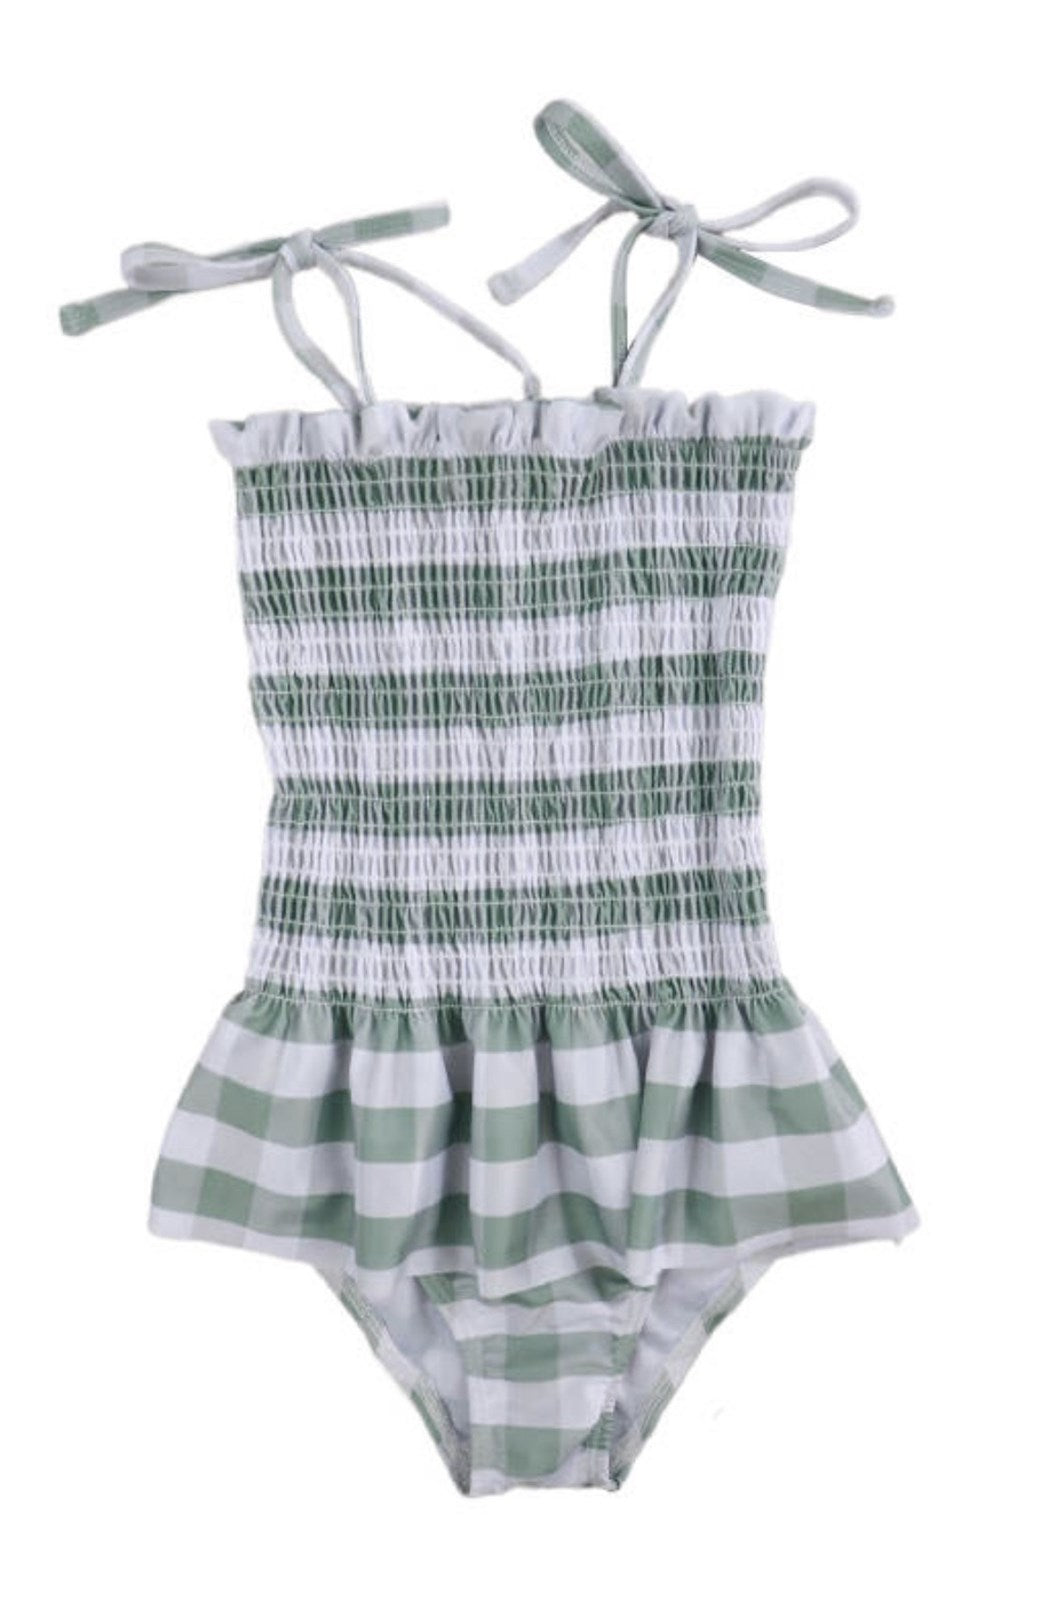 Girls Swimsuits - Green Checkered Stripe - 1 Pc Accordion